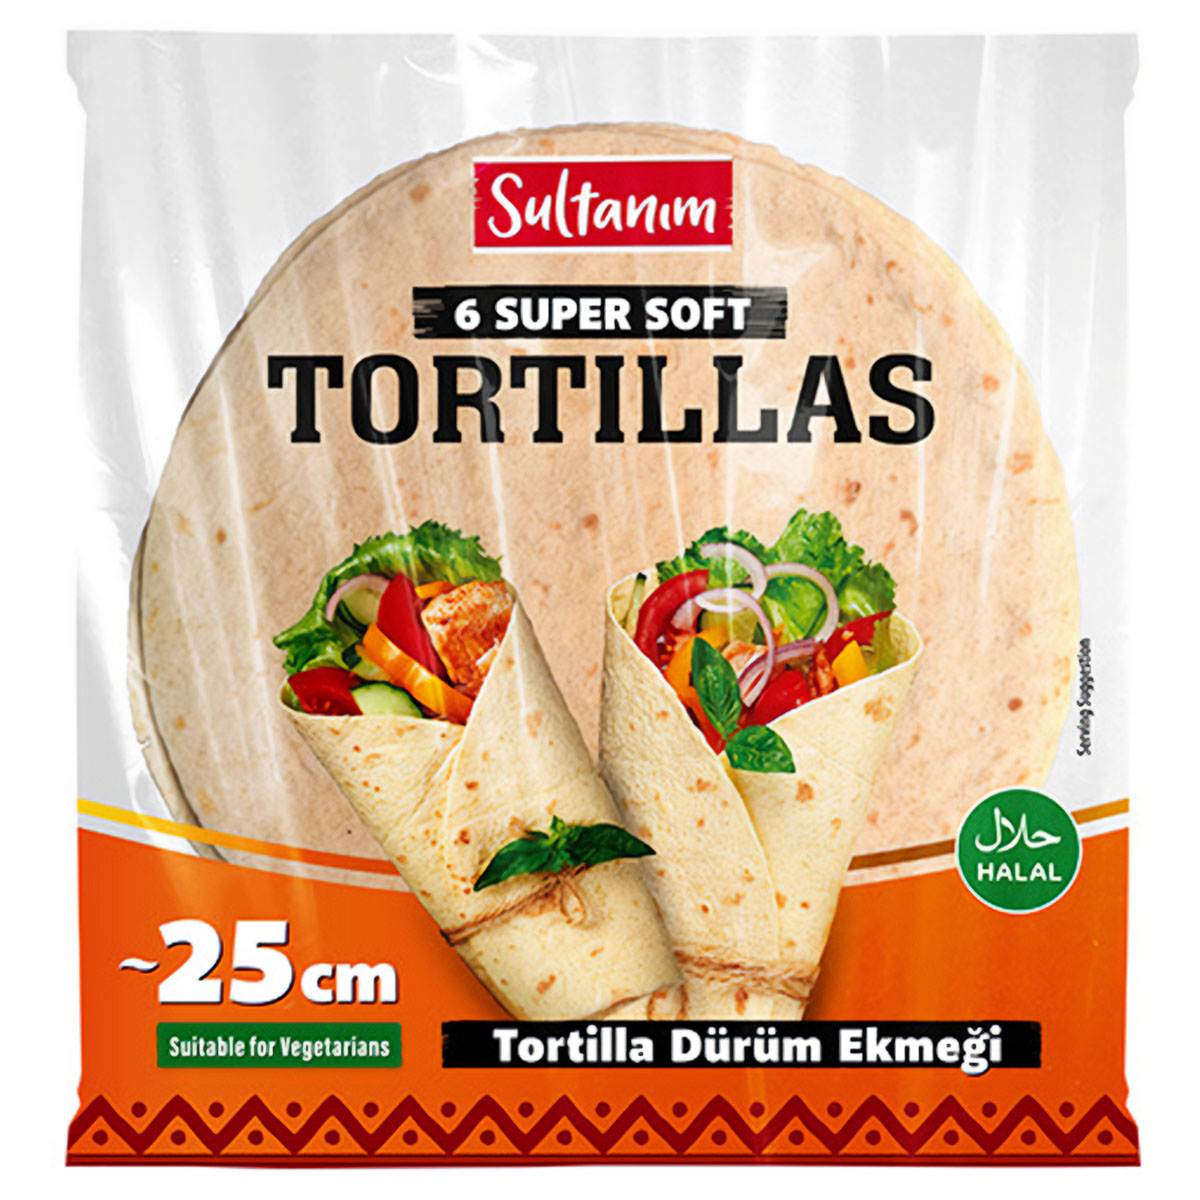 Selman Sultanim - Super Soft Tortilla Wrap Bread 25cm - 6 Pack 250g.